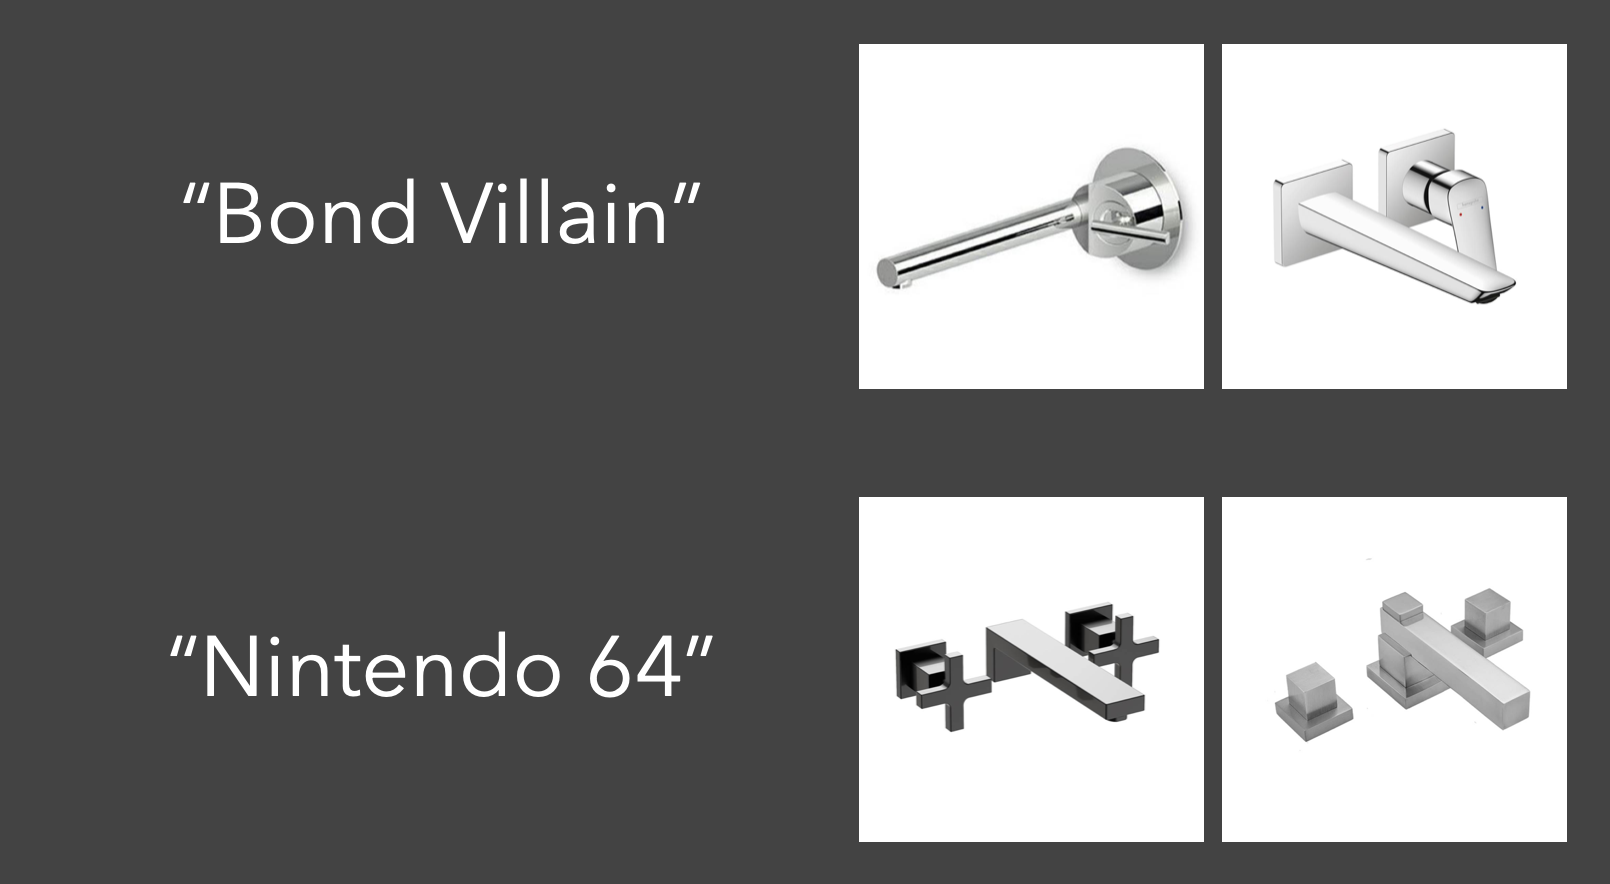 Faucets similar to "Bond Villain" and "Nintendo 64"